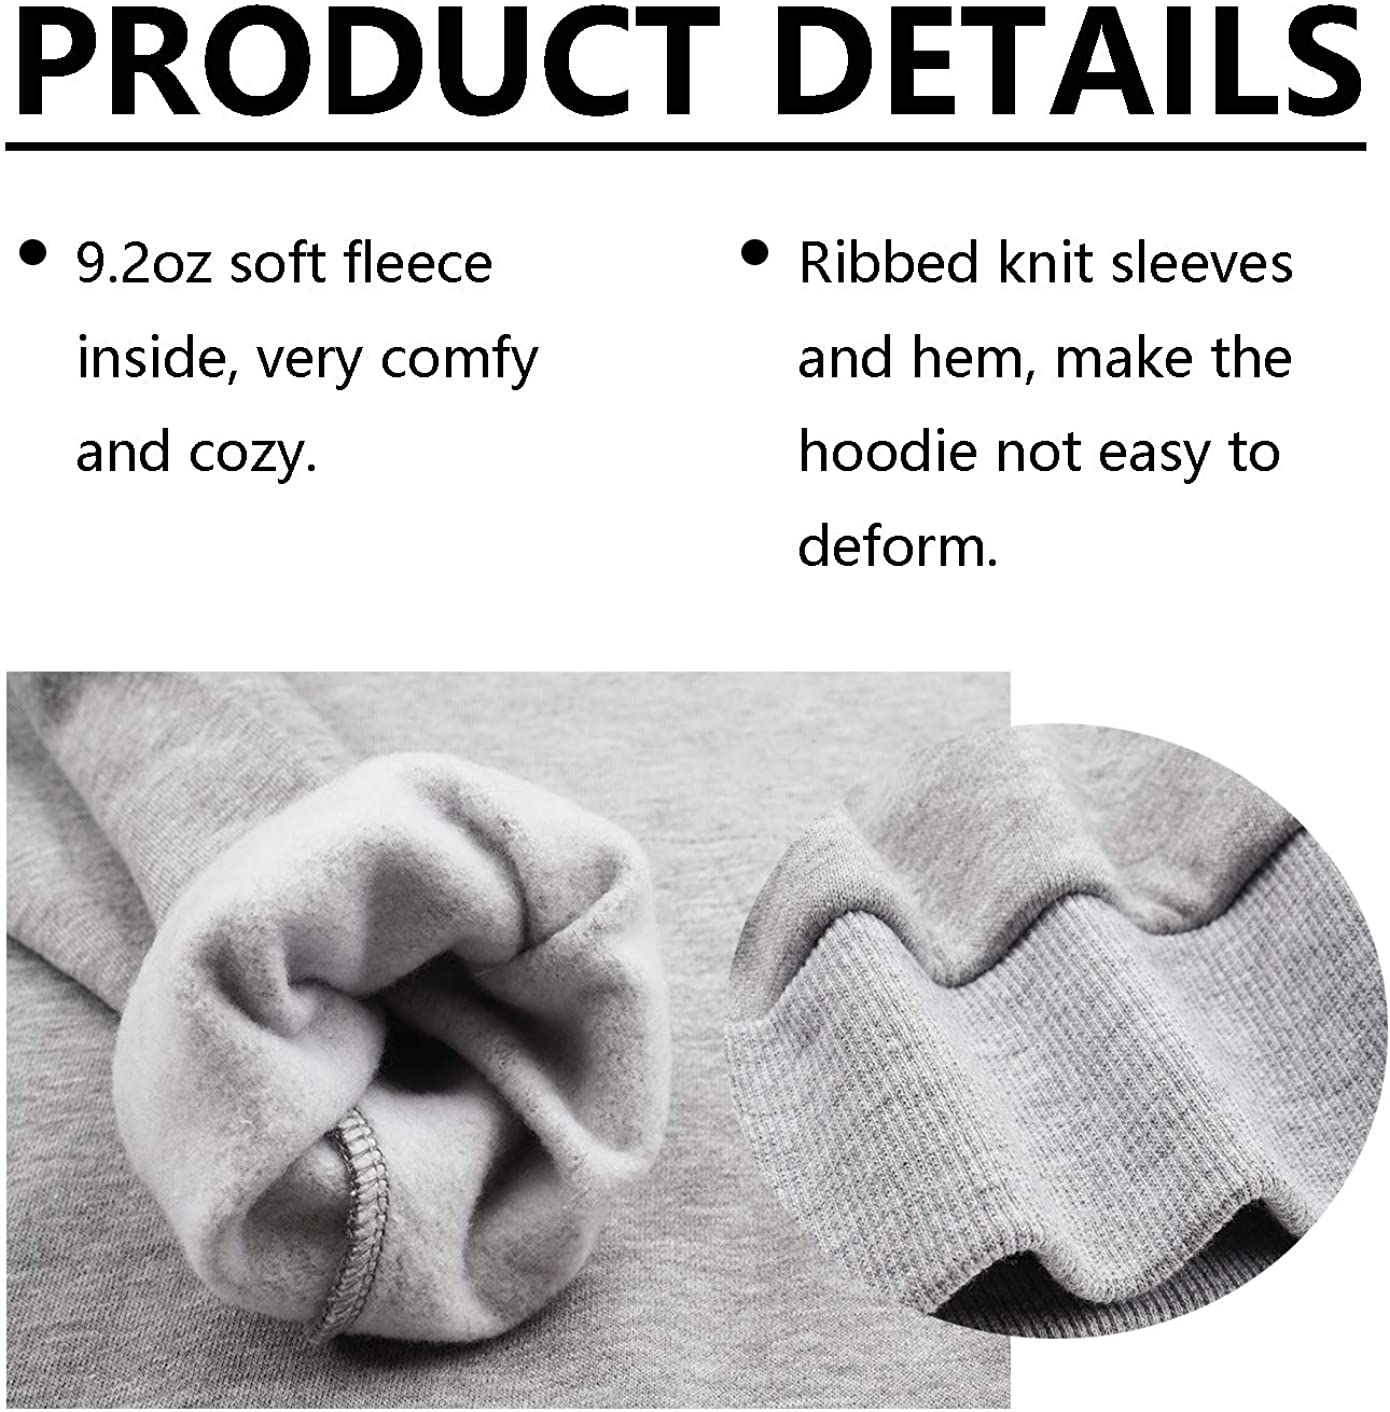 Custom Men's Hoodie Sweatshirts Promotional Long Sleeve Soft Brushed Fleece Hoody Classic Drawstring Pullover